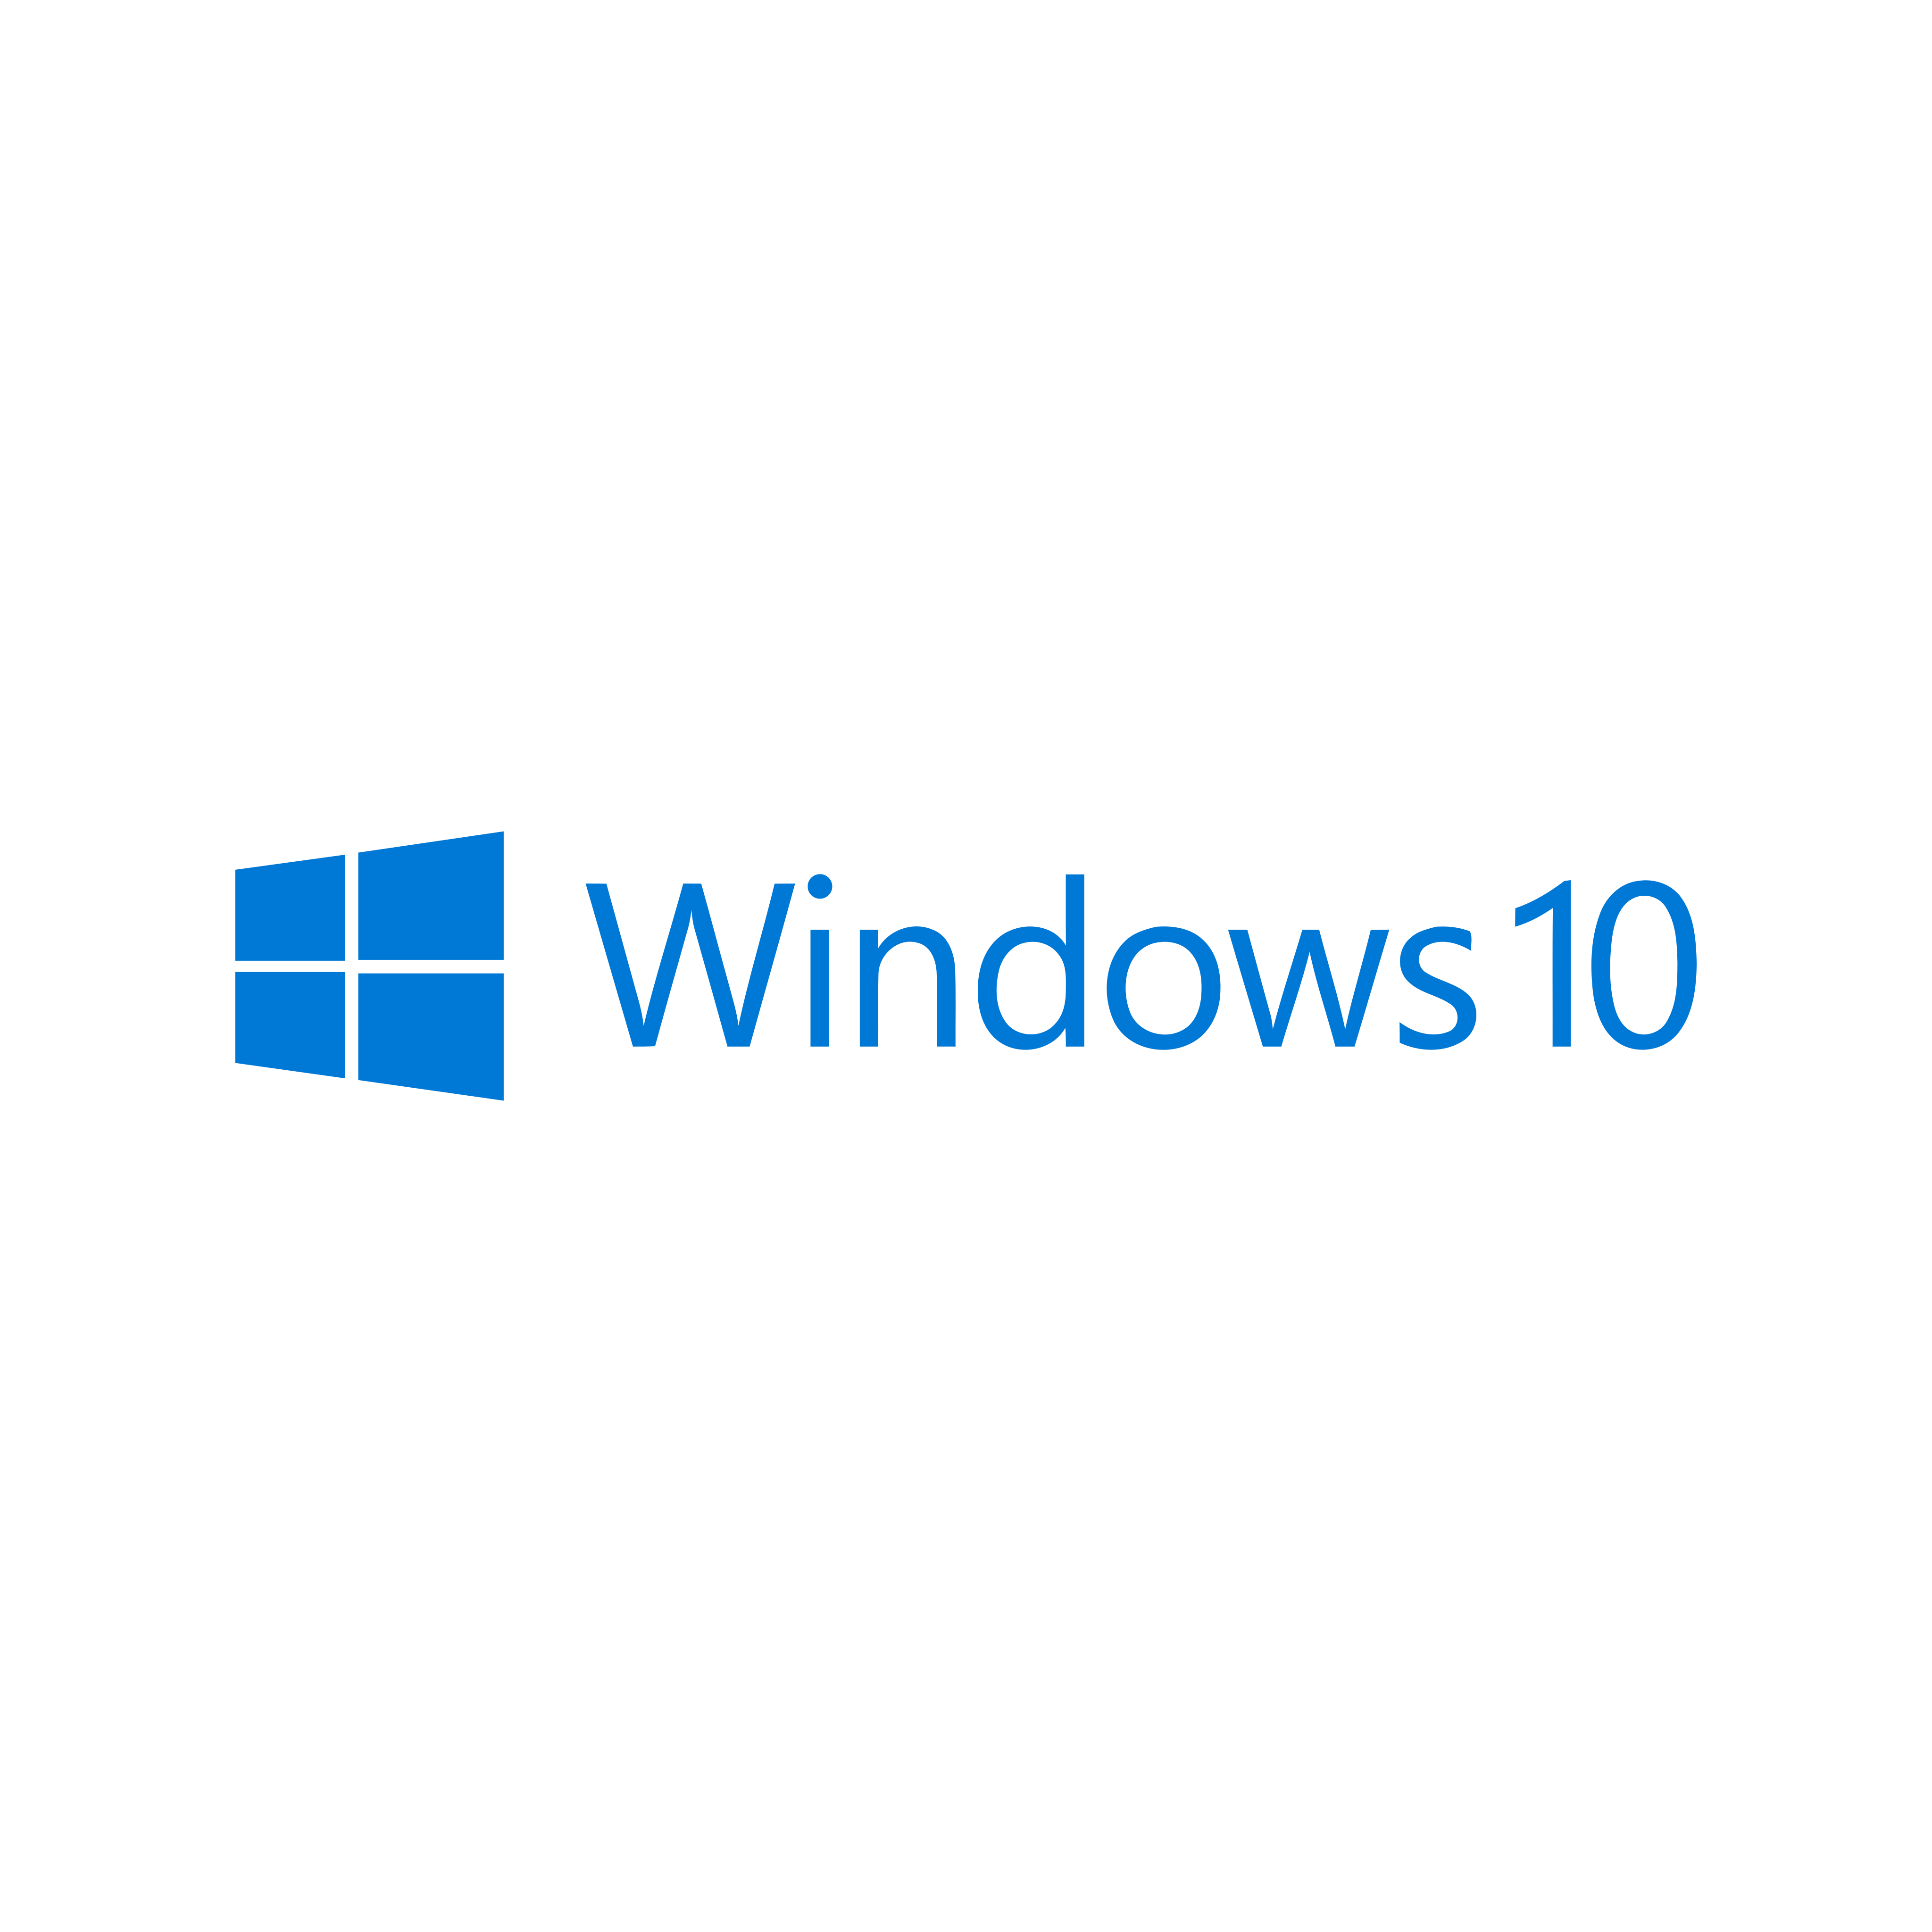 windows 10 logo 1 - Windows 10 Logo